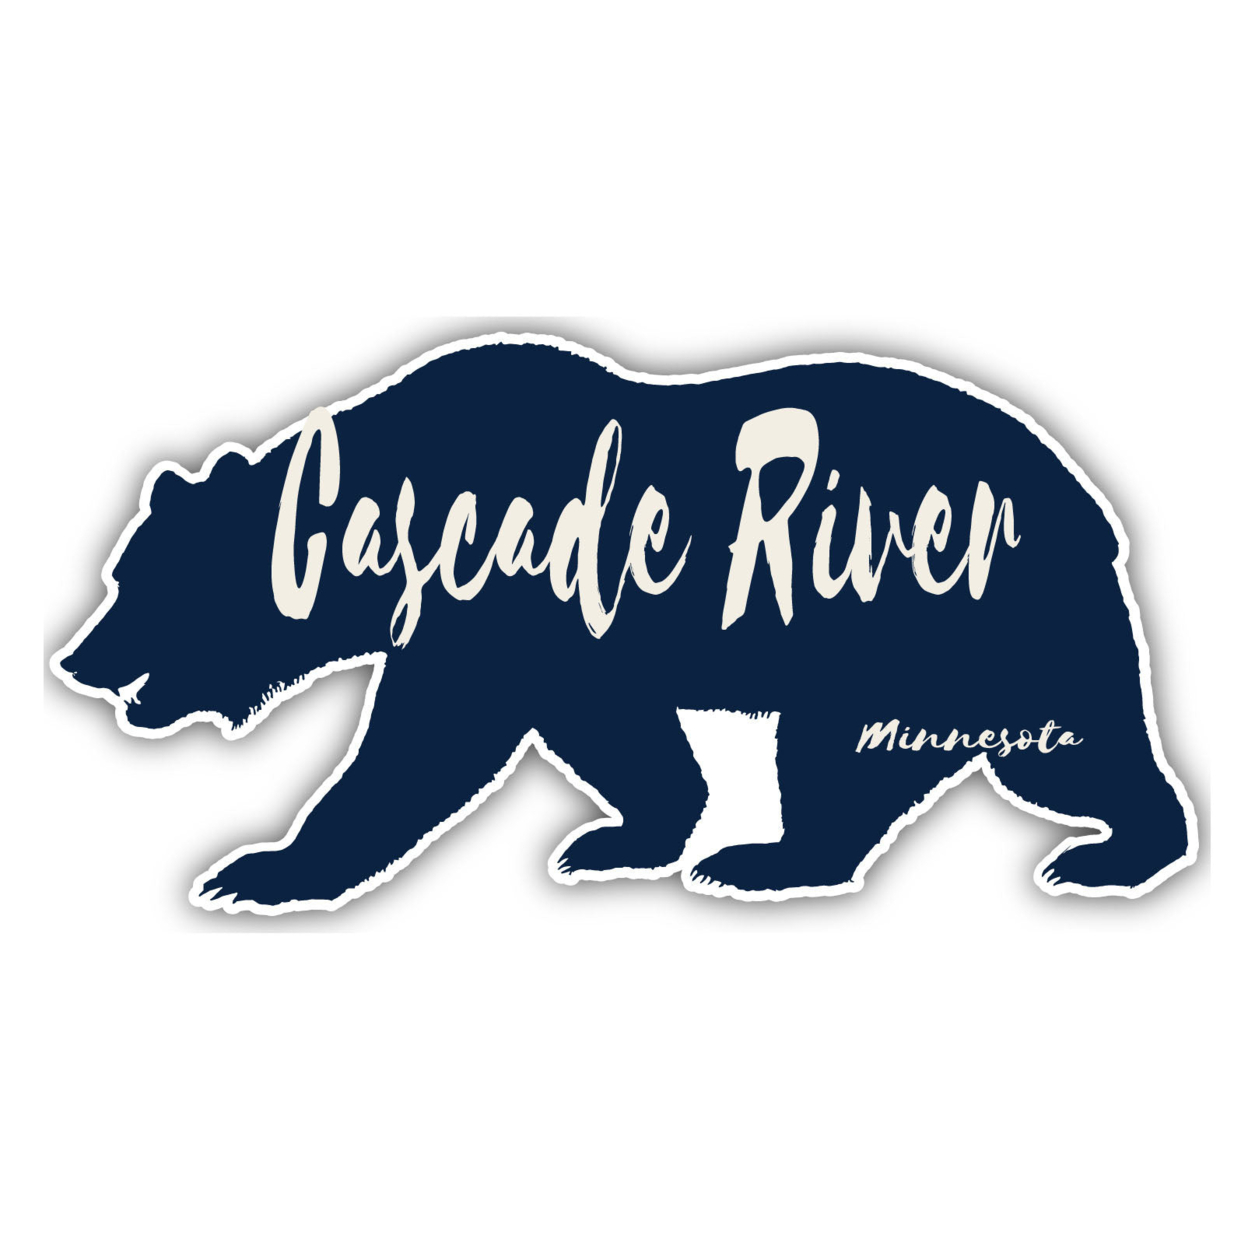 Cascade River Minnesota Souvenir Decorative Stickers (Choose Theme And Size) - Single Unit, 4-Inch, Bear